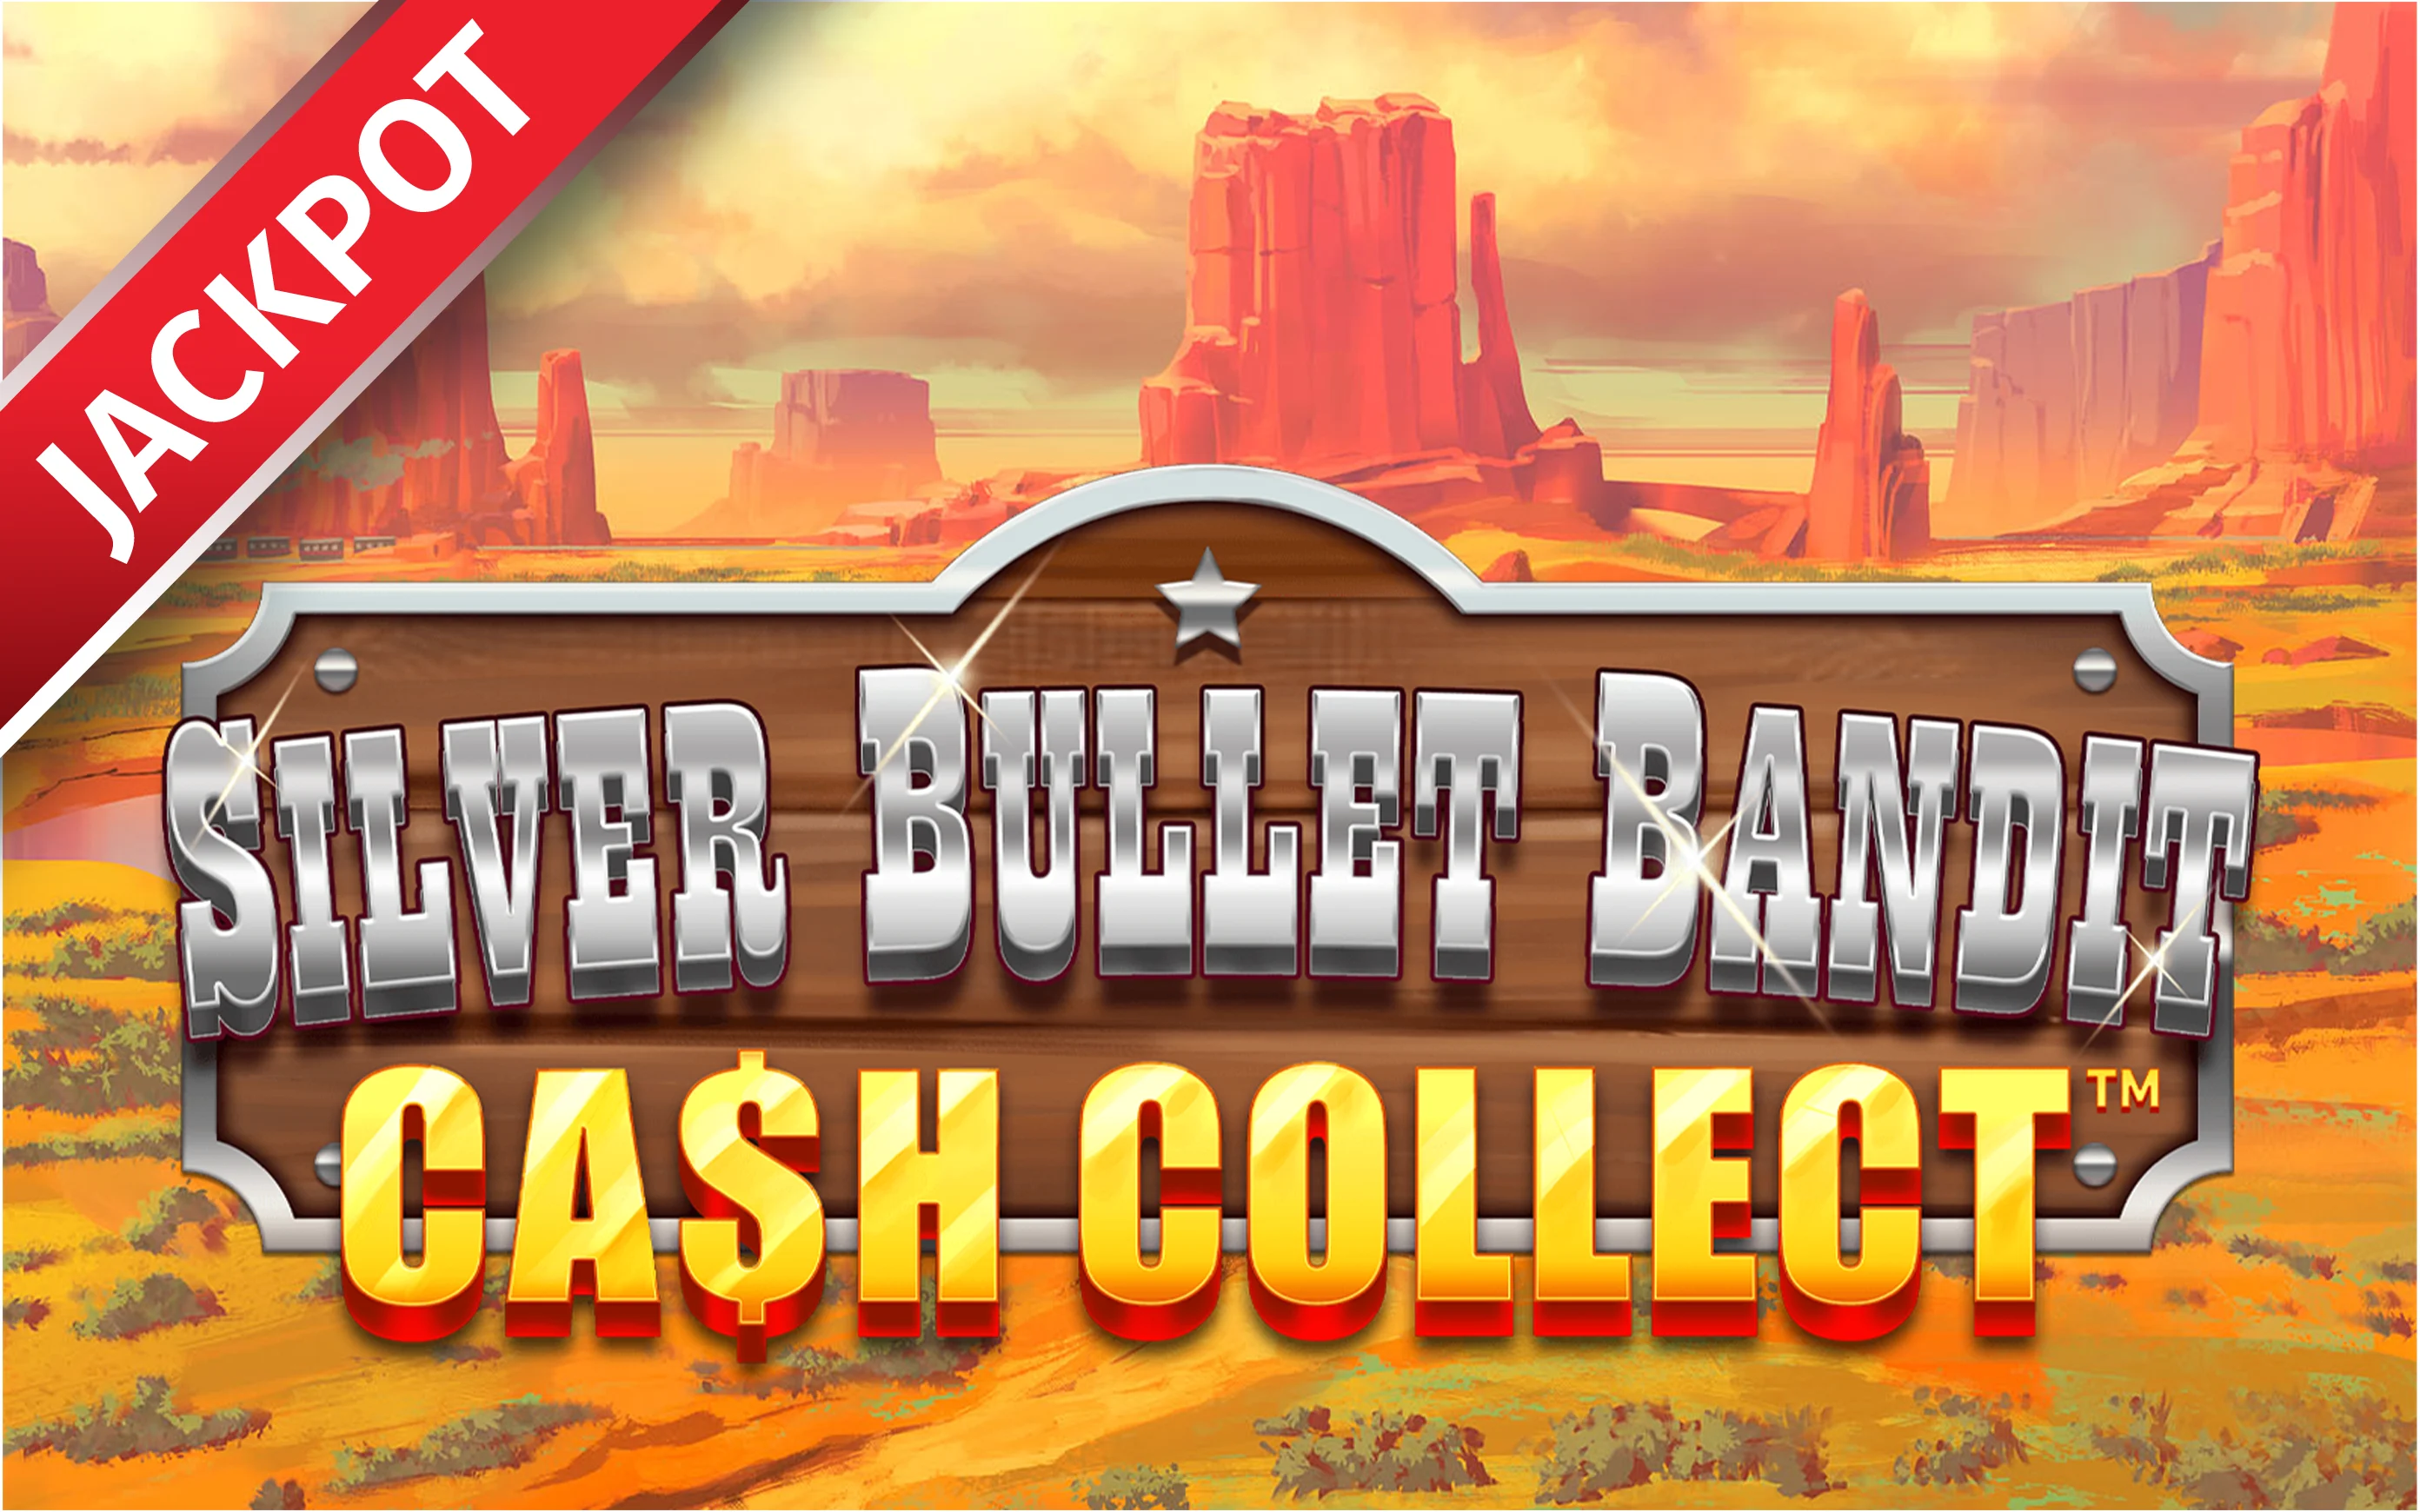 Starcasino.be online casino üzerinden Silver Bullet Bandit: Cash Collect oynayın